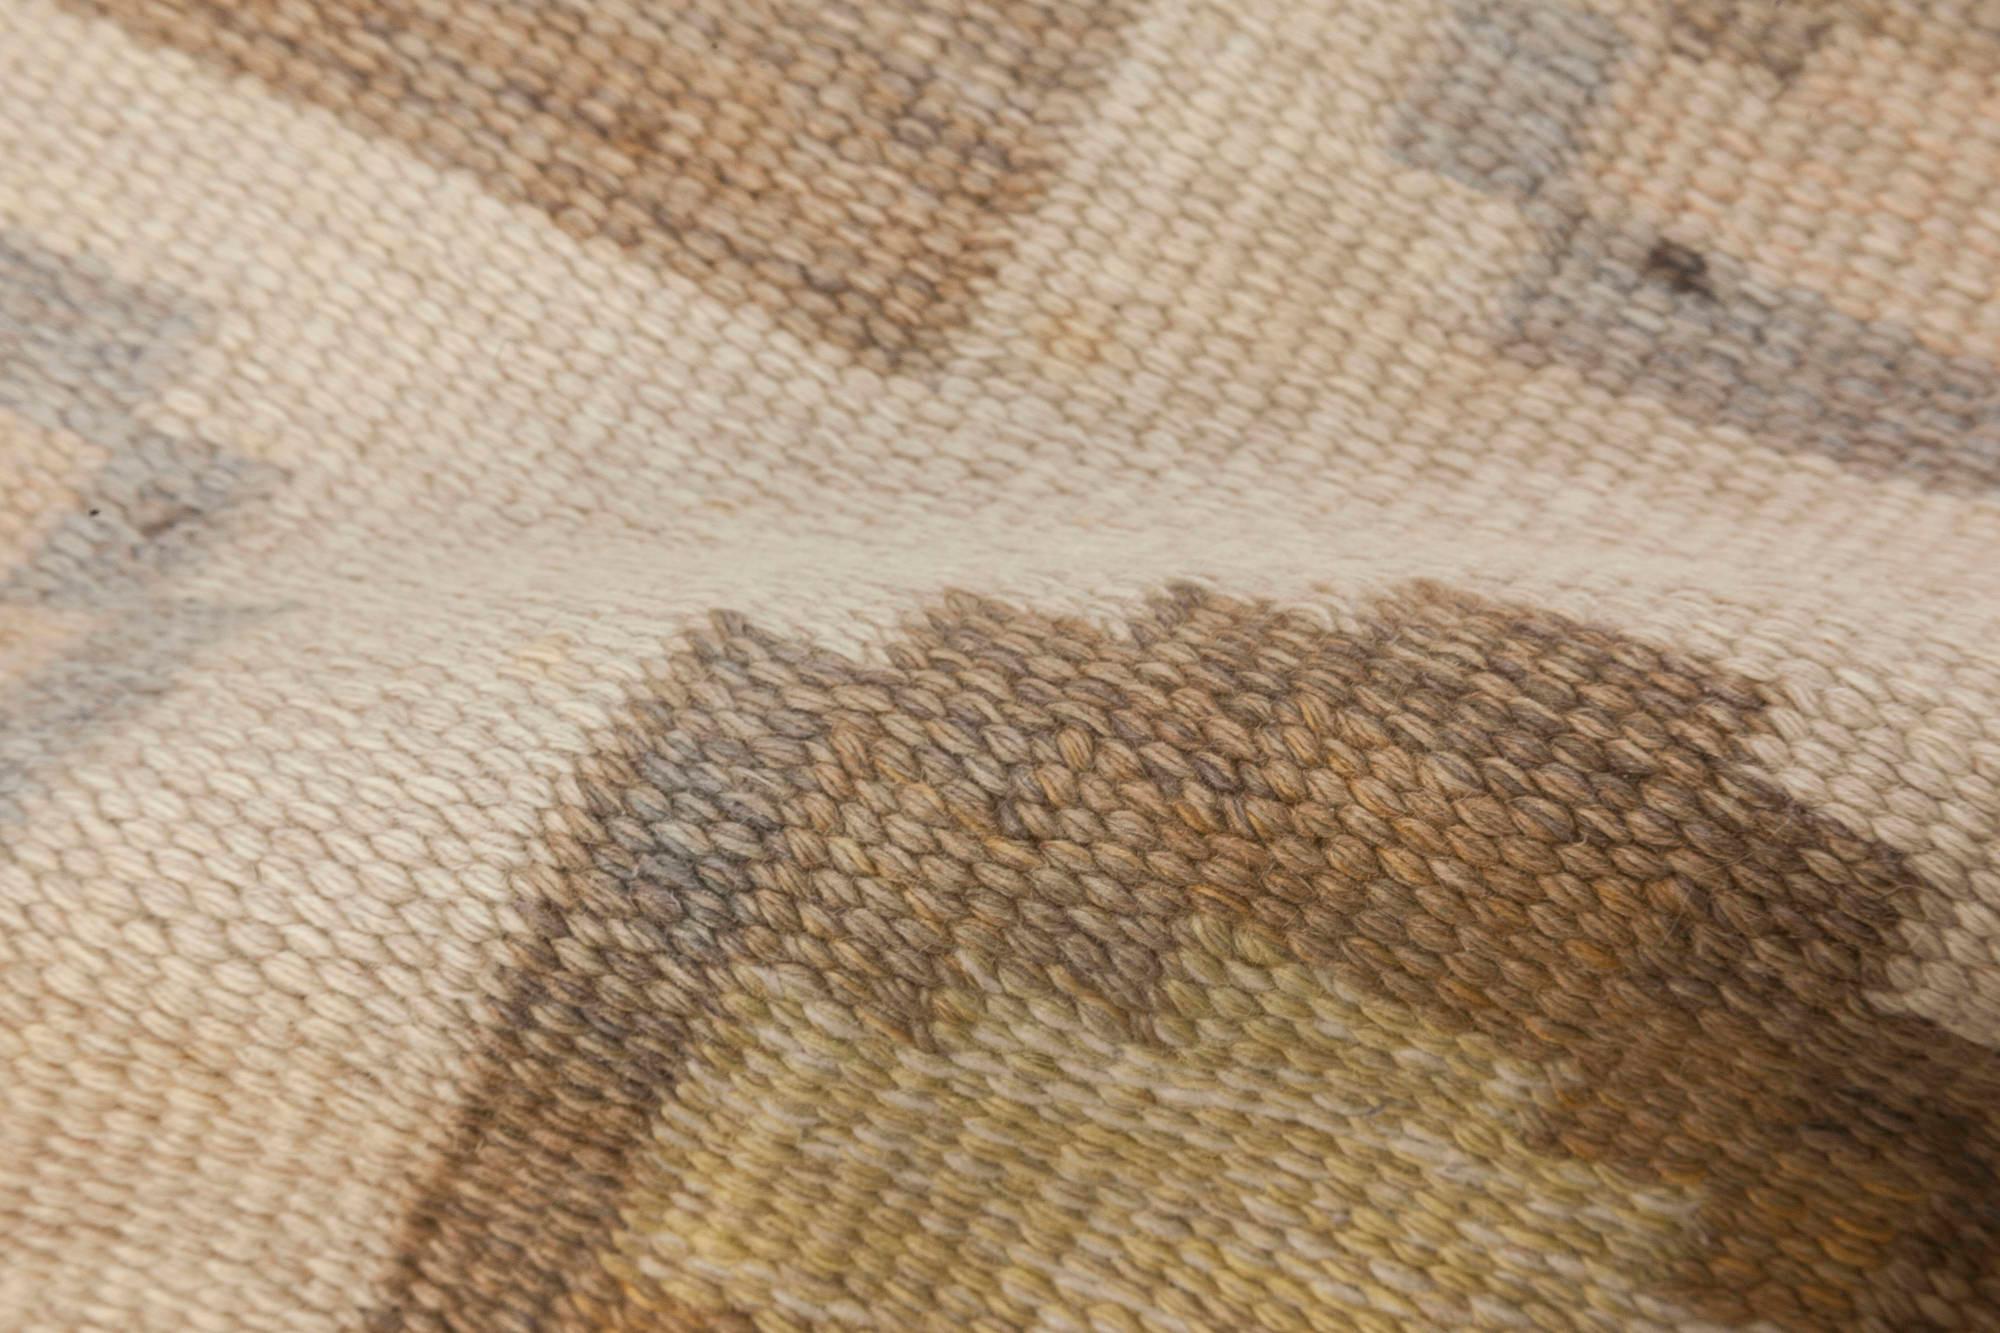 Vintage Swedish flat-weave rug signed by Ingegerd Silow
Size: 4'6